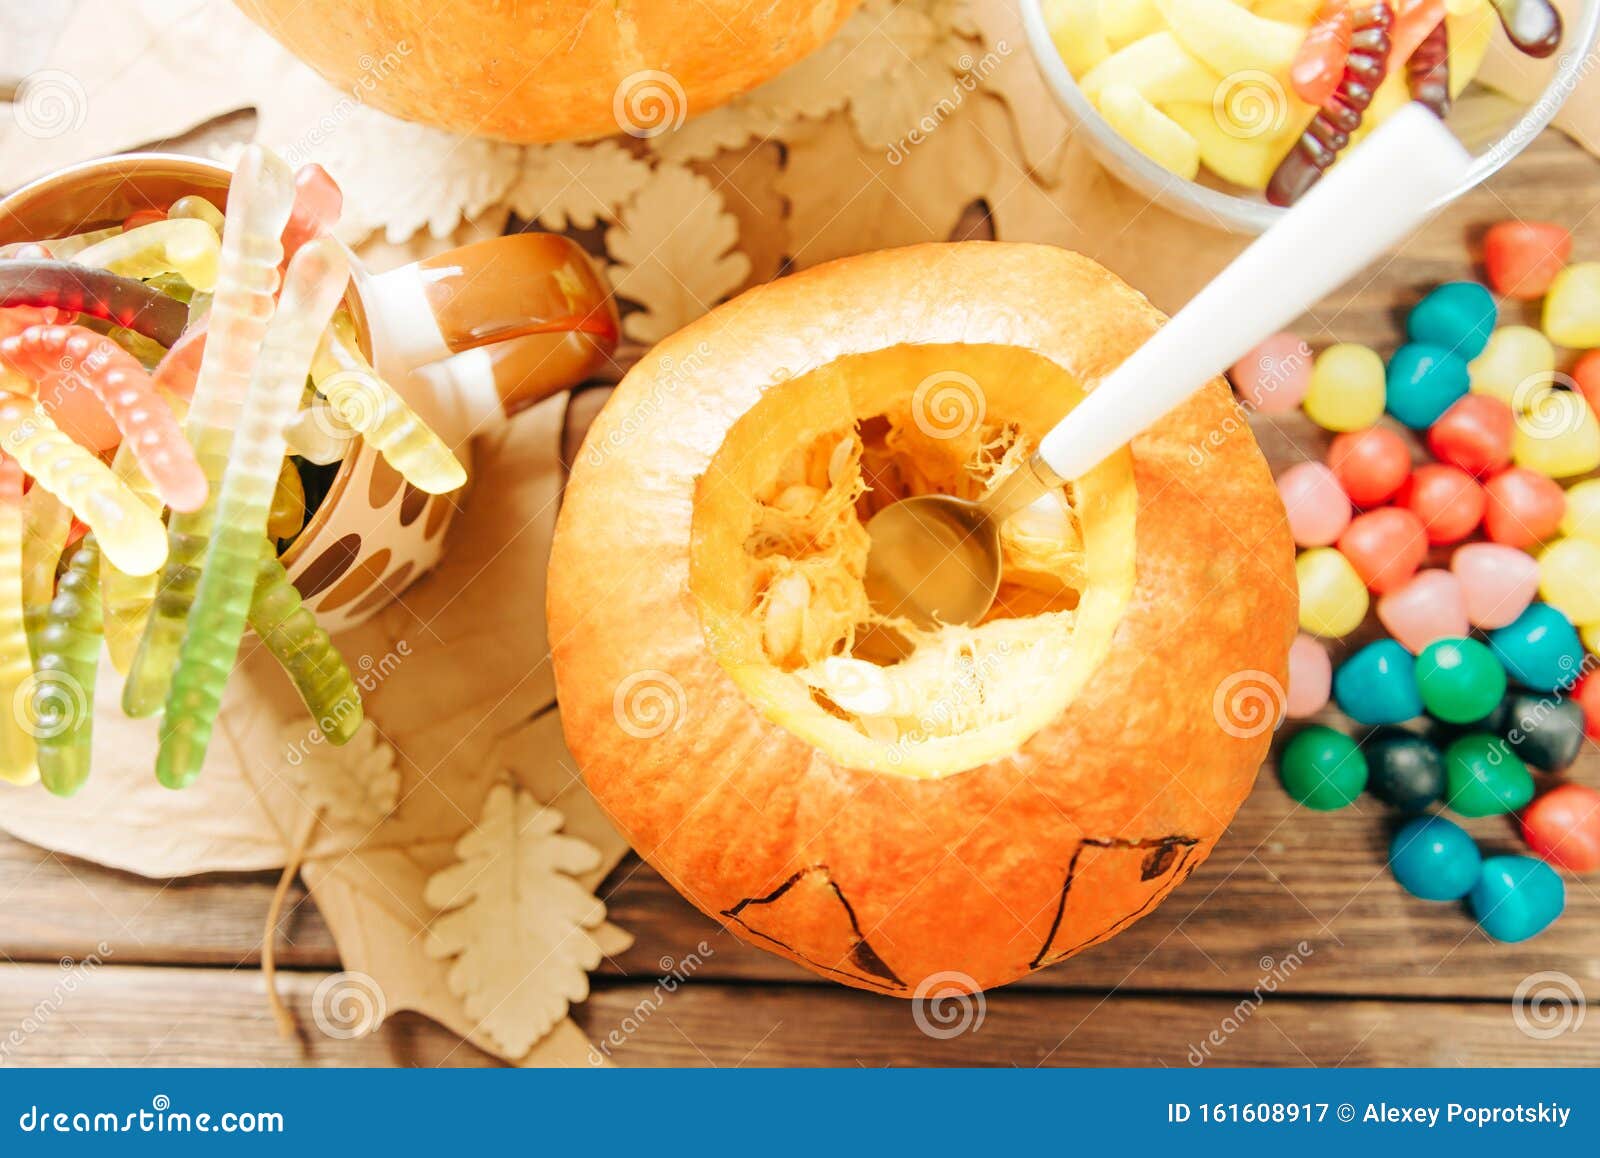 Process of Preparation Halloween Jack-o-lantern Pumpkin. Stock Image ...